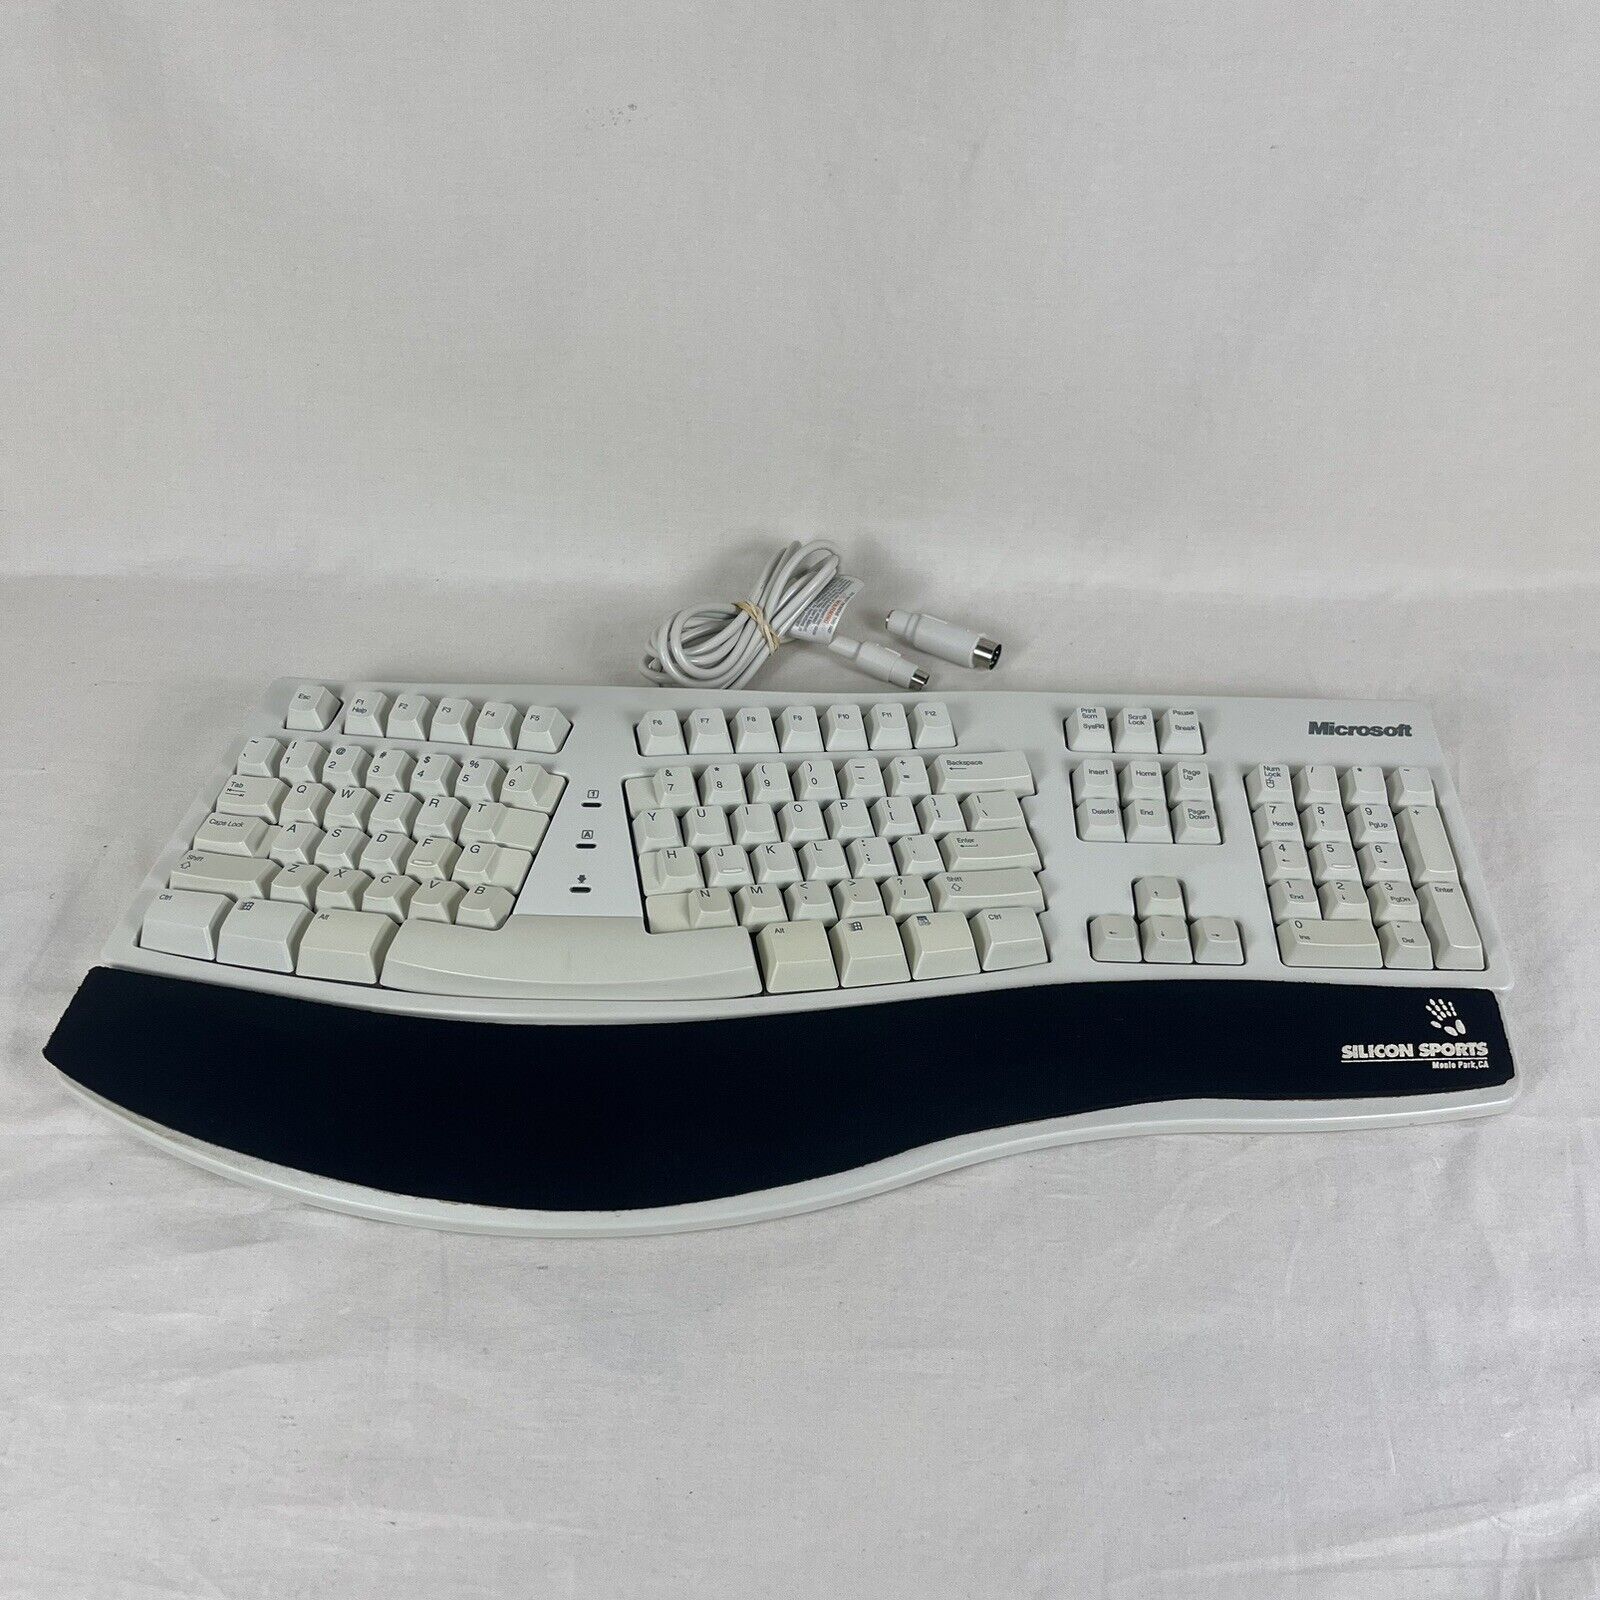 Vintage Microsoft Natural Keyboard 58221 Ergonomic PS/2 First Generation TESTED